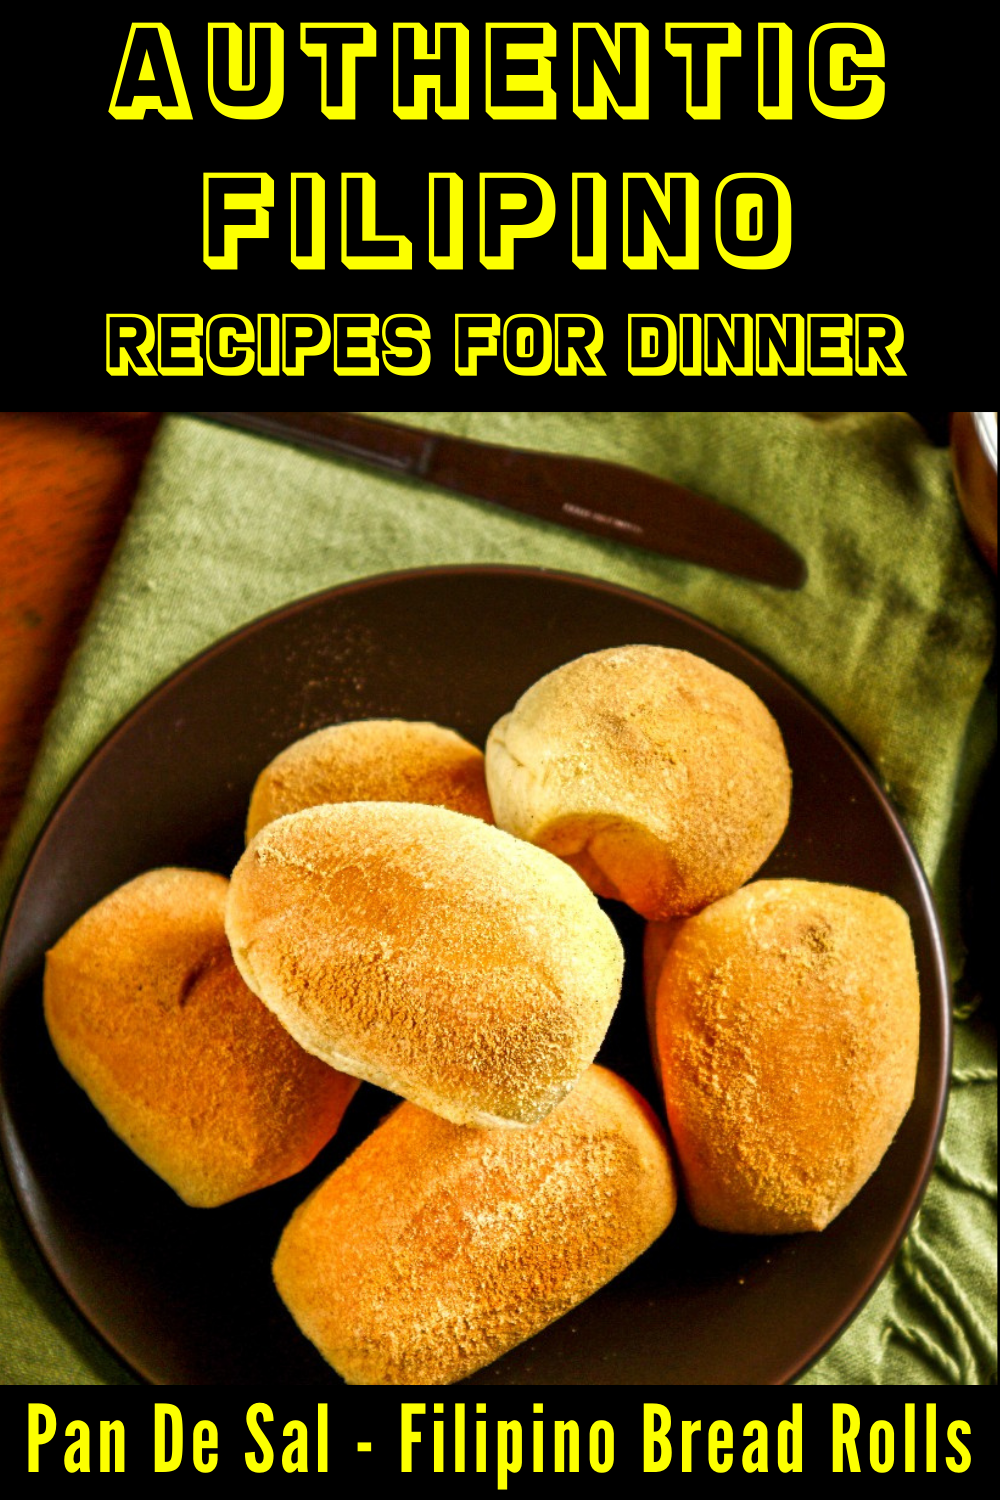 Authentic Filipino Recipes for Dinner - Pan De Sal - Filipino Bread Rolls